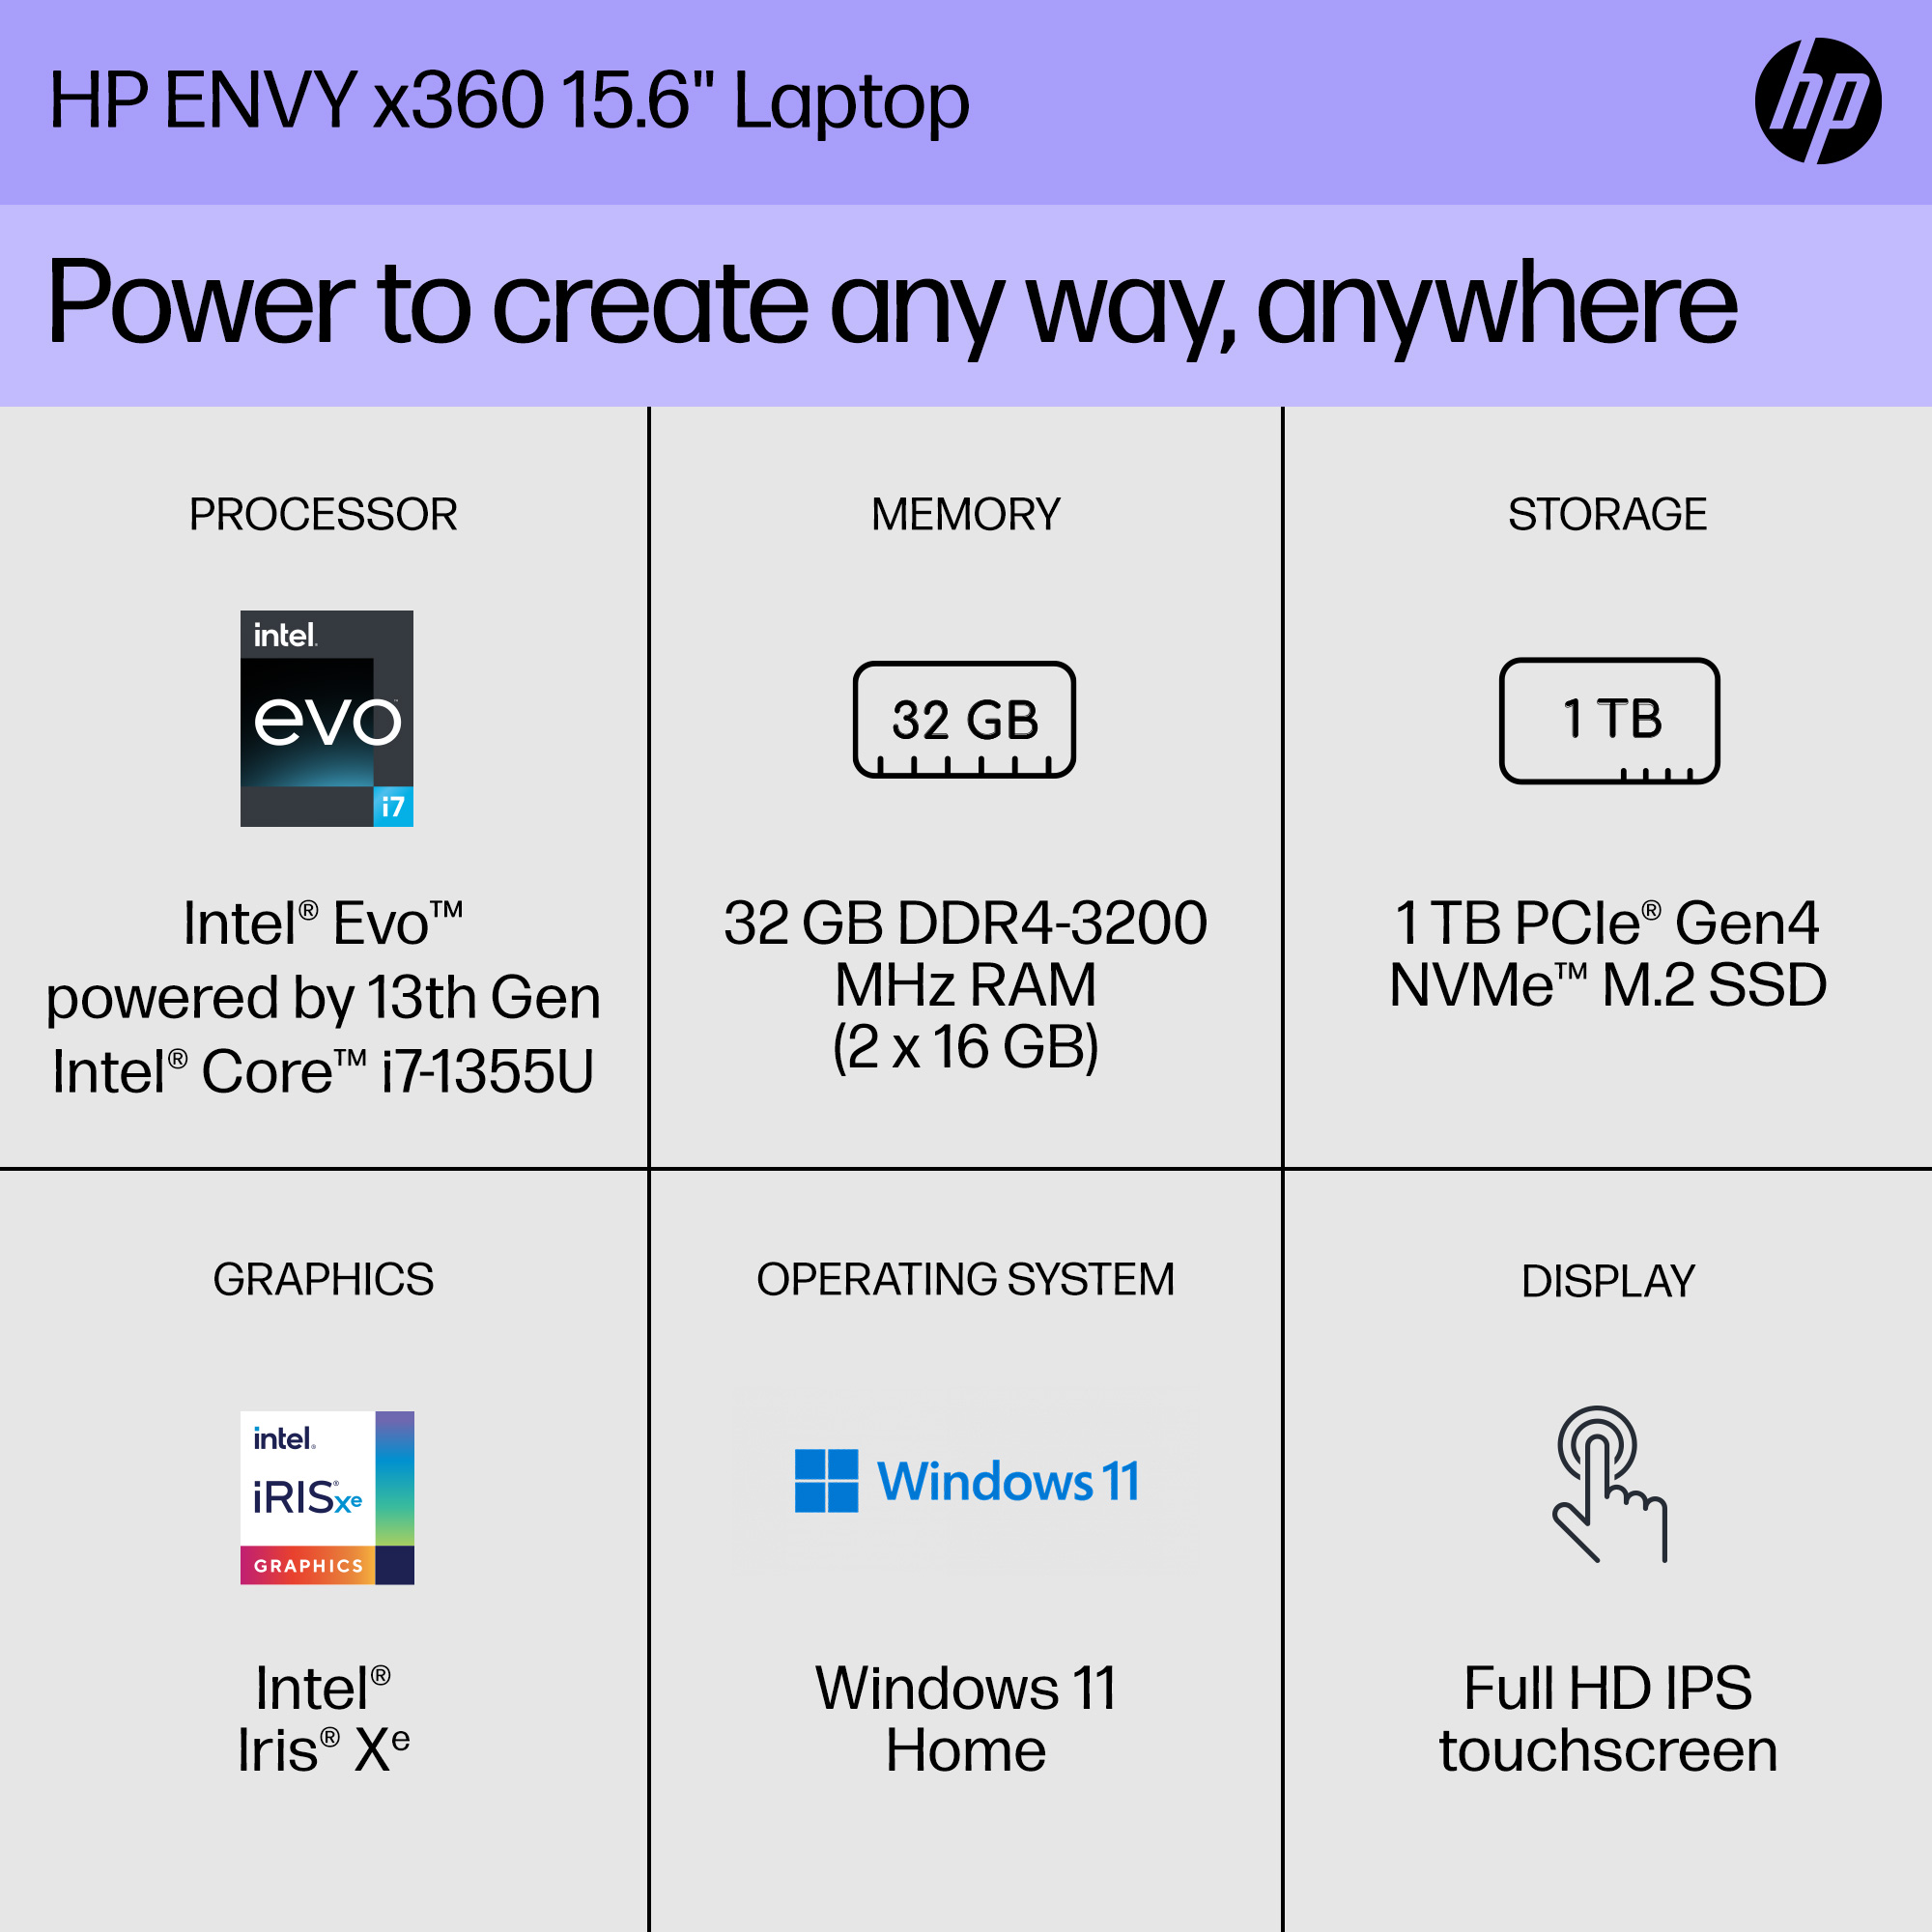 HP ENVY x360 15.6